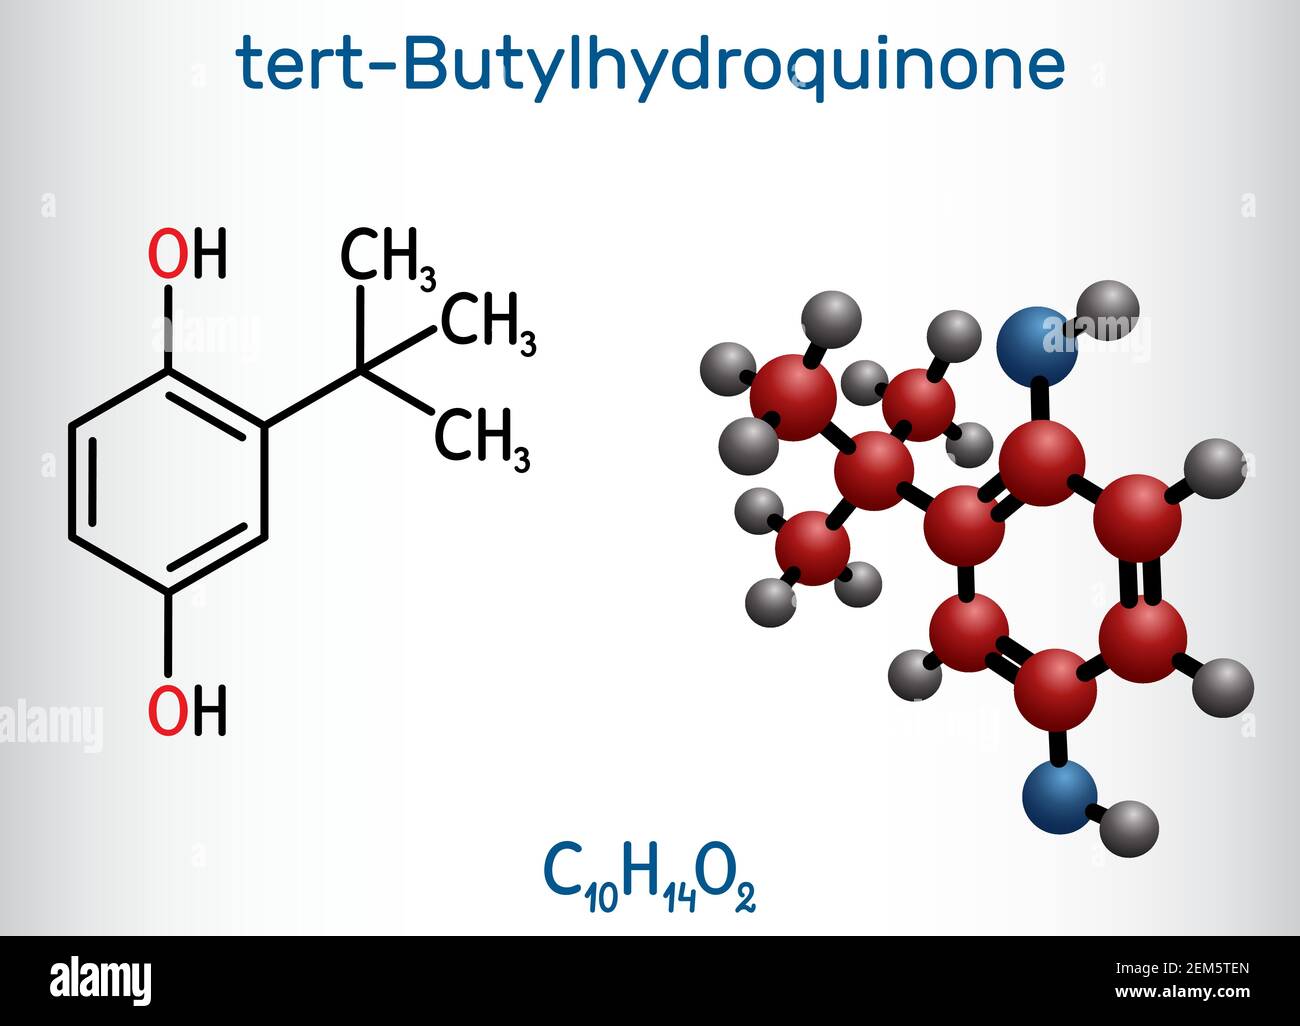 TBHQ, tert-Butylhydroquinone, tertiary butylhydroquinone molecule. It is antioxidant, food additive E319, derivative of hydroquinone. Structural chemi Stock Vector